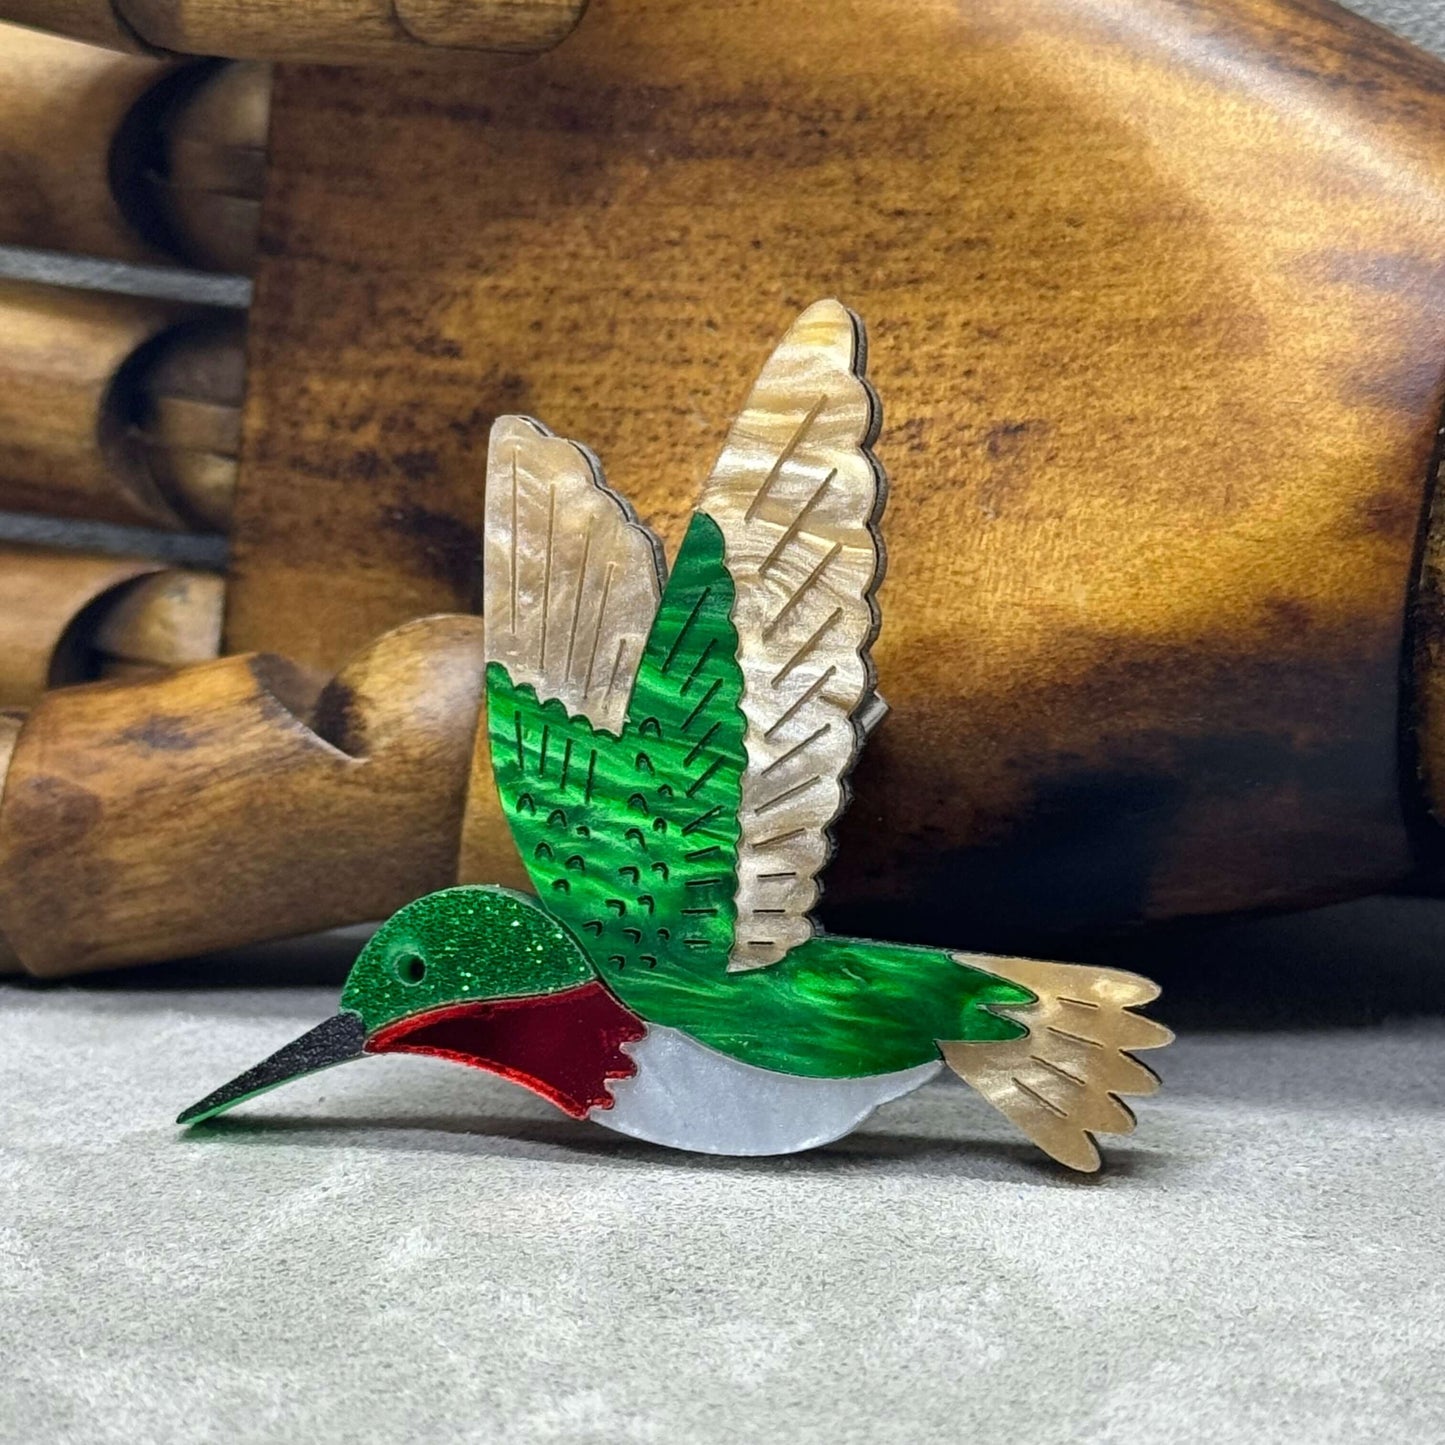 The Hummingbird- Acrylic Art Bird Brooch - Twelve Silver Trees